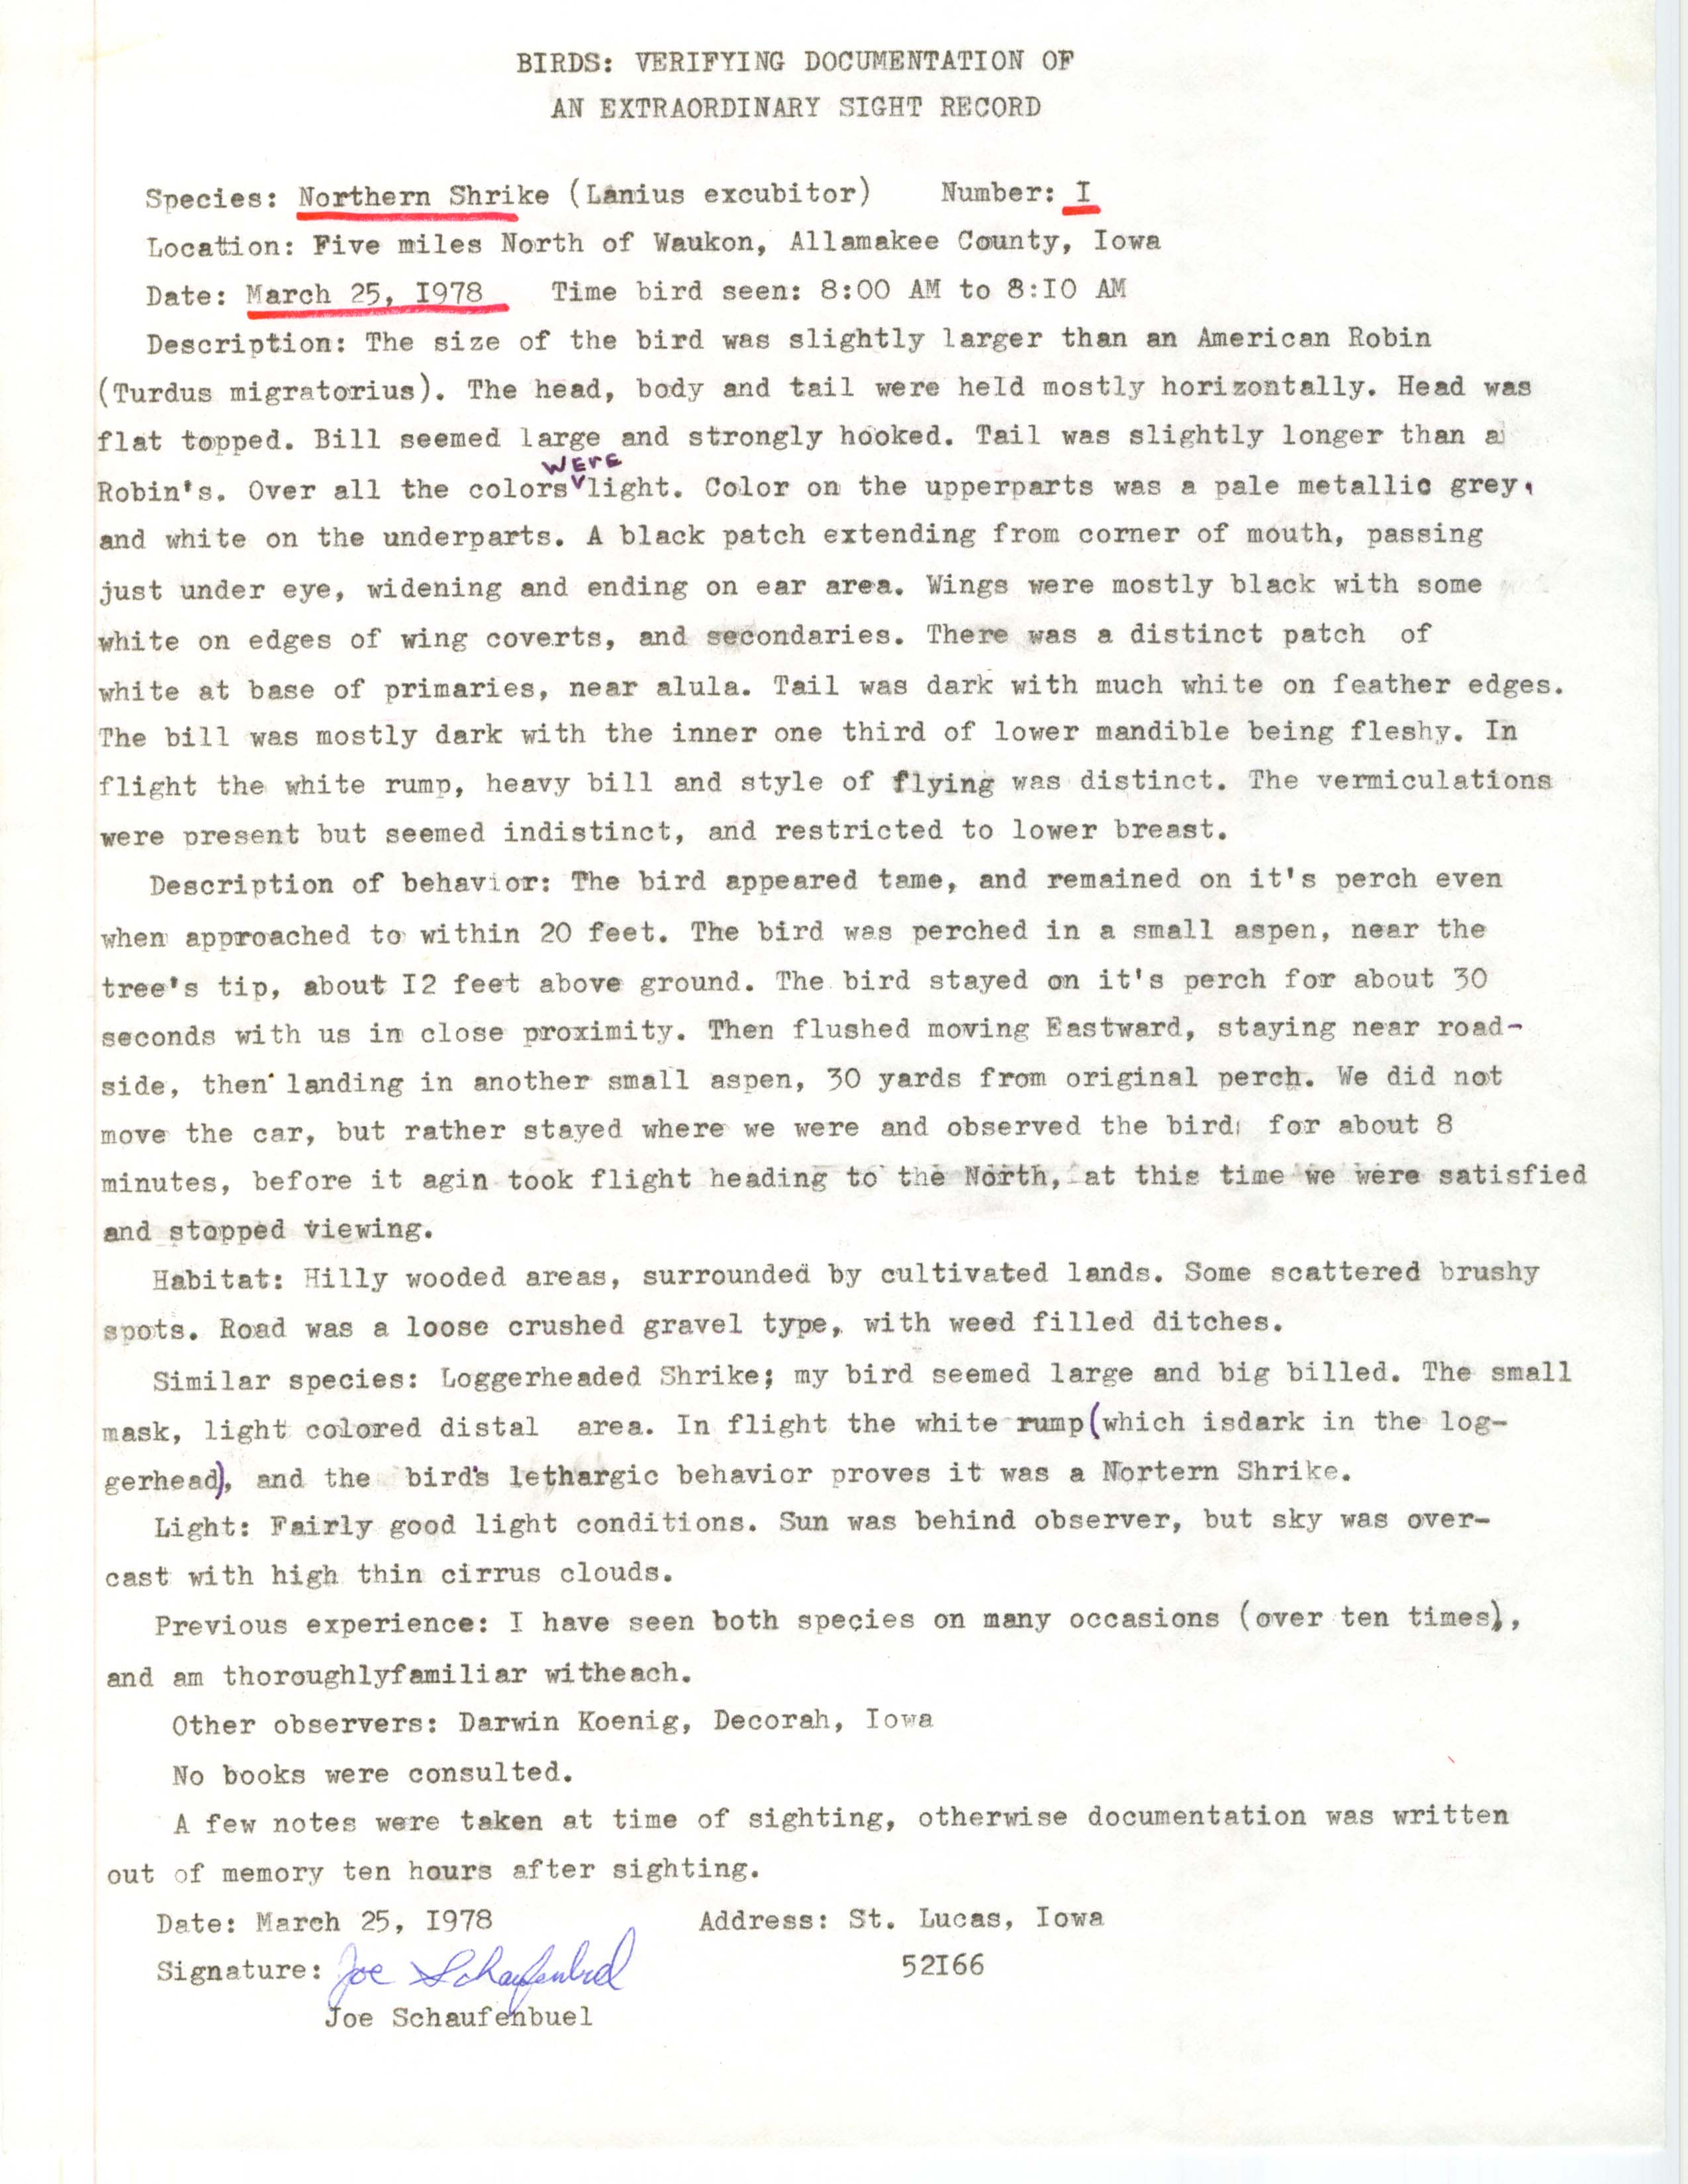 Rare bird documentation form for Northern Shrike north of Waukon, 1978